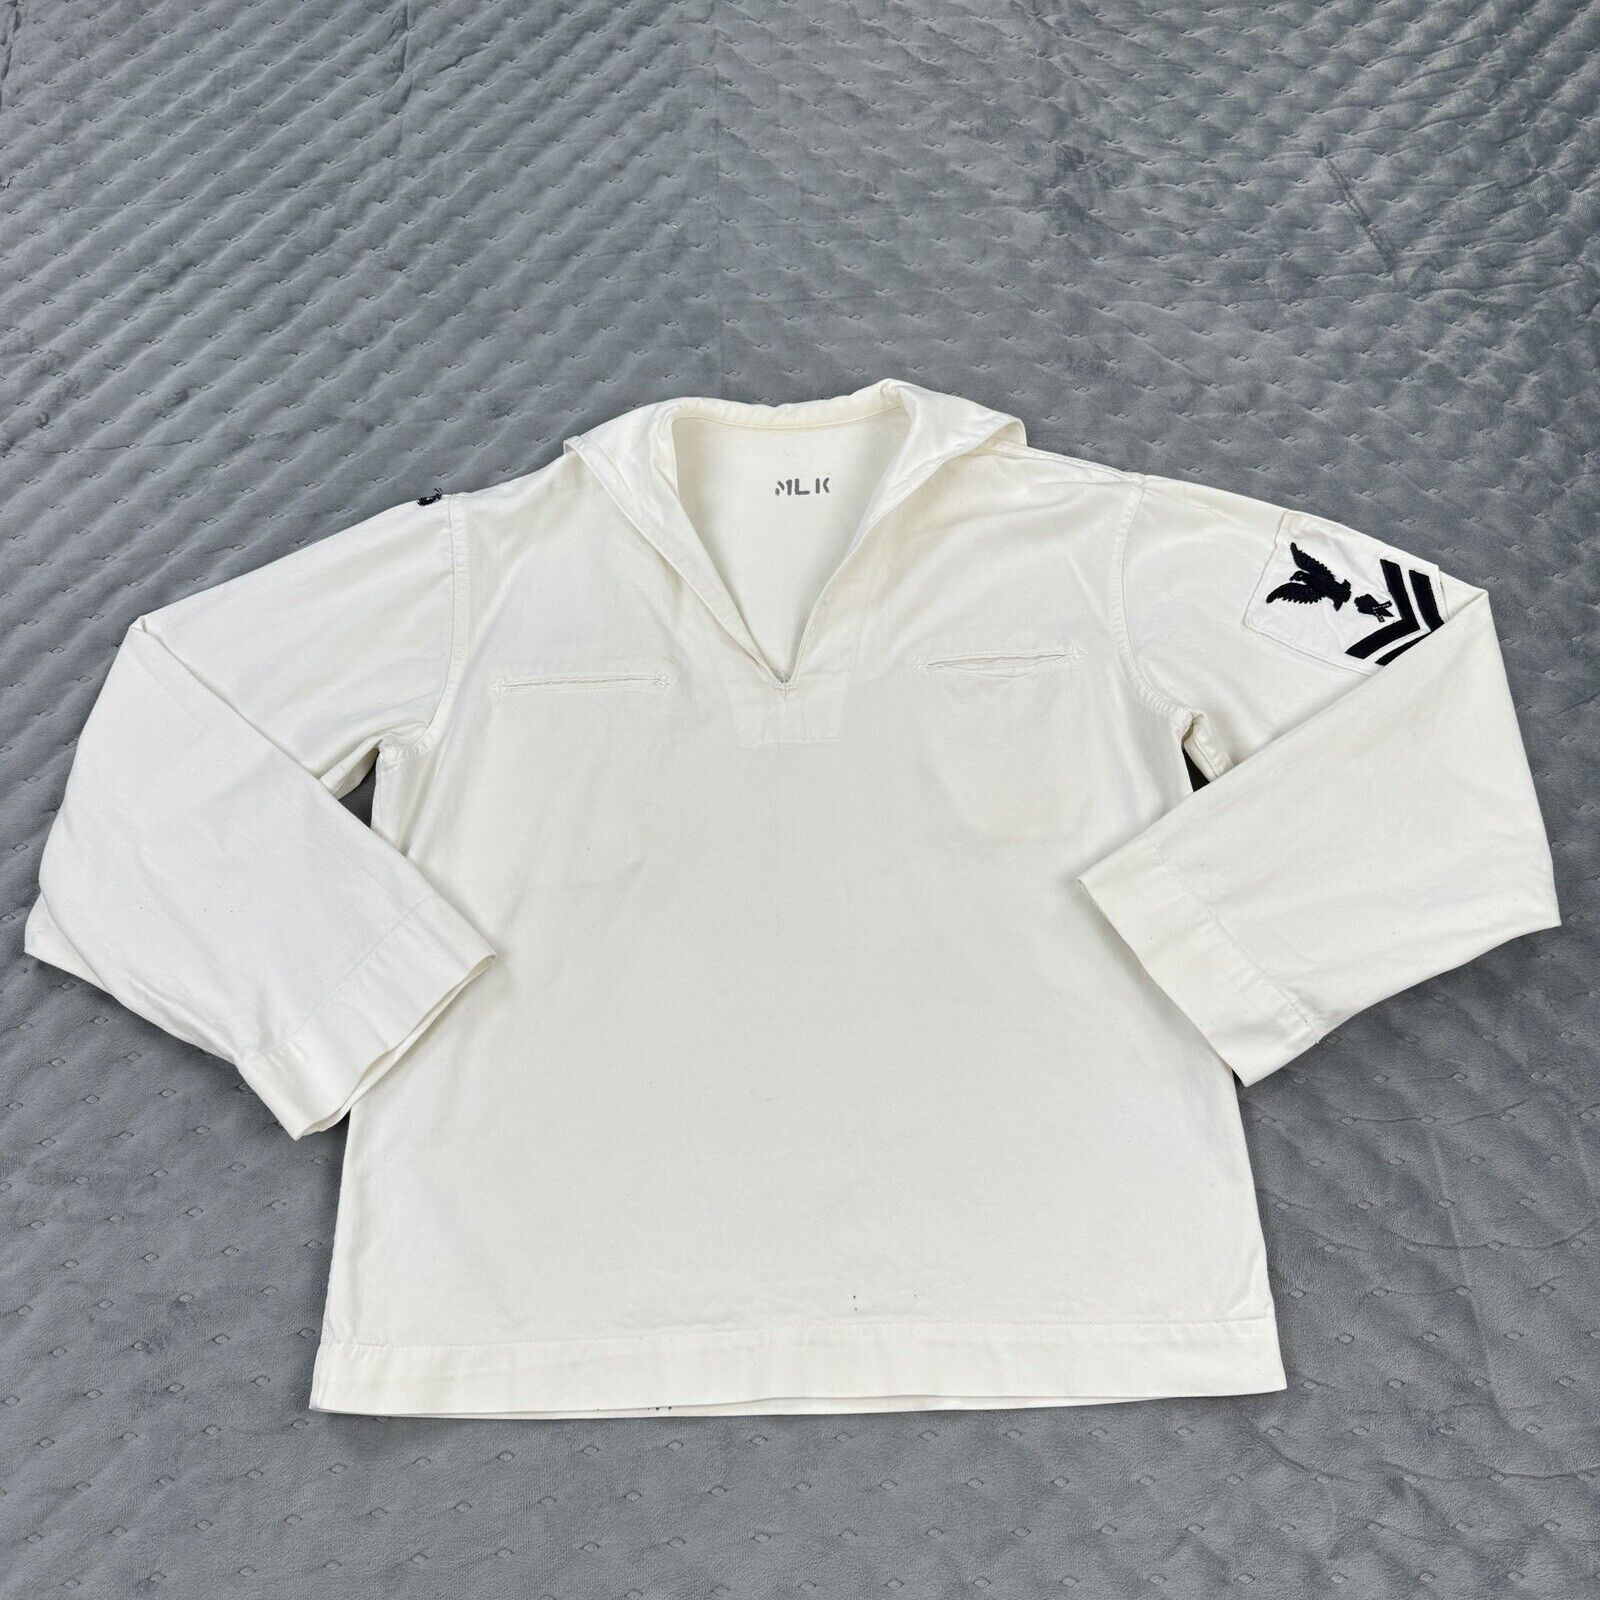 VINTAGE 70s US Navy Shirt Adult Medium White Jumper Cracker Jack Uniform Mens